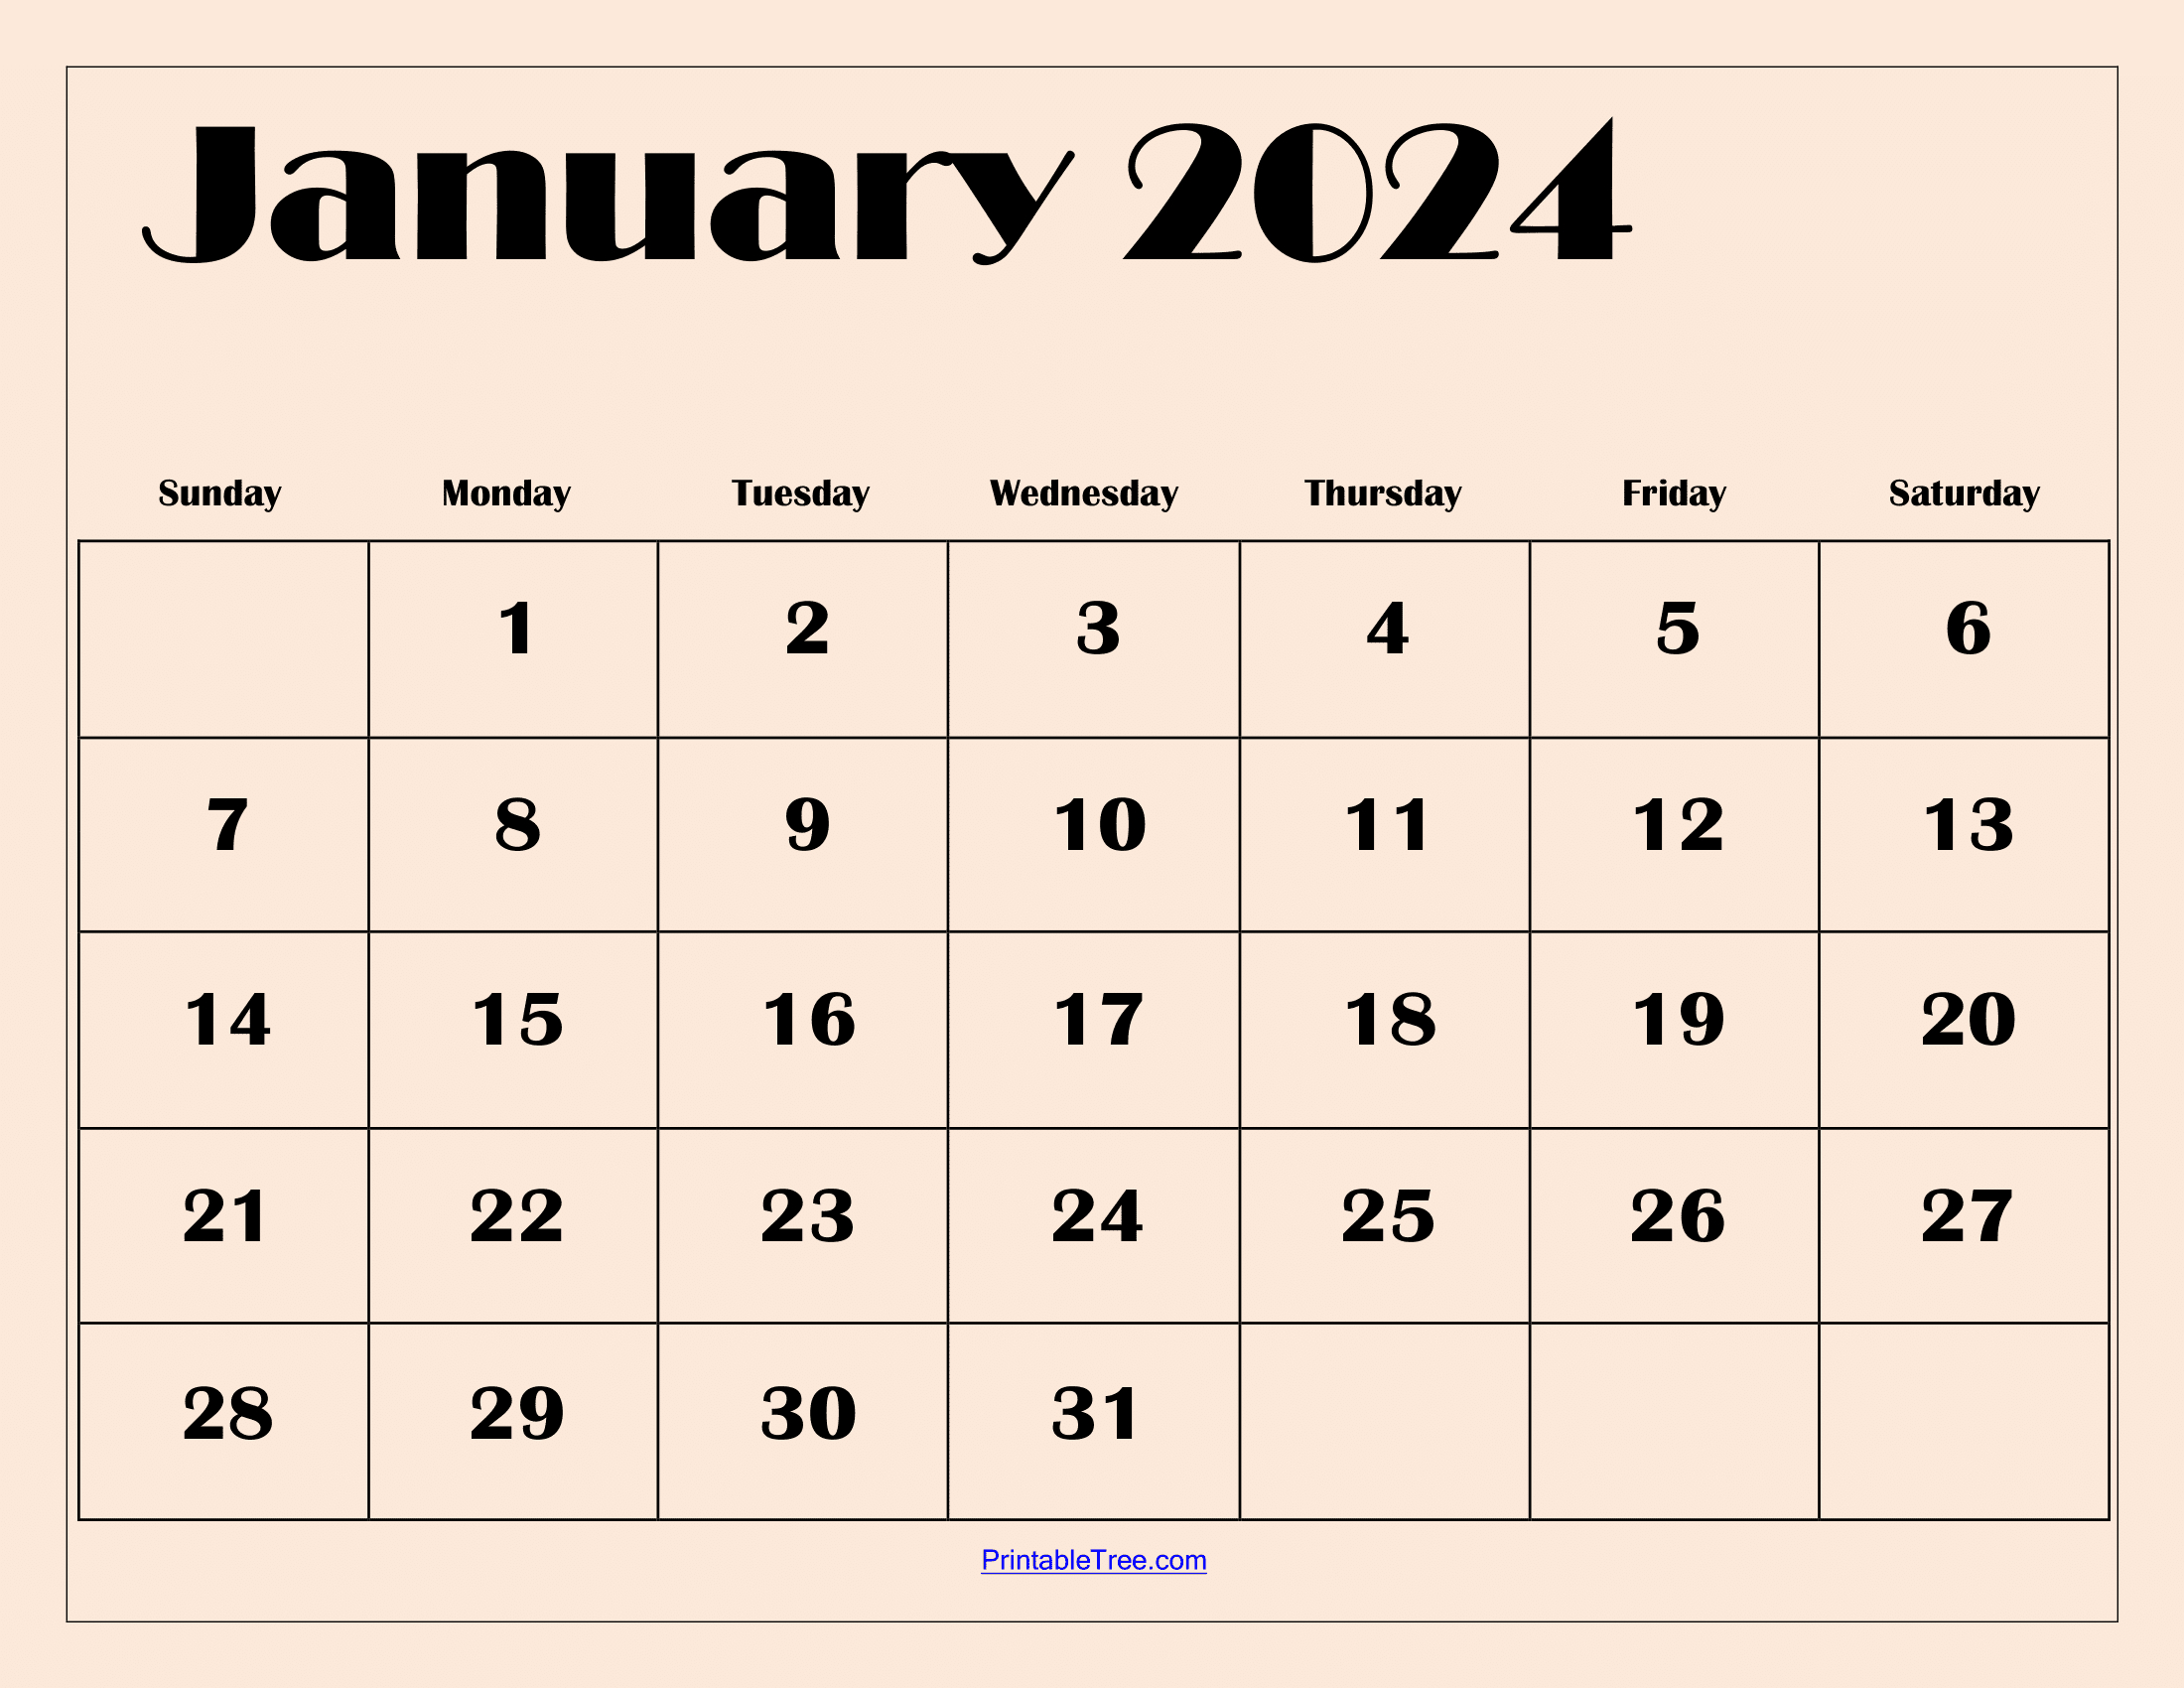 January 2024 Calendar Printable Pdf Template With Holidays | Online Printable Calendar 2024